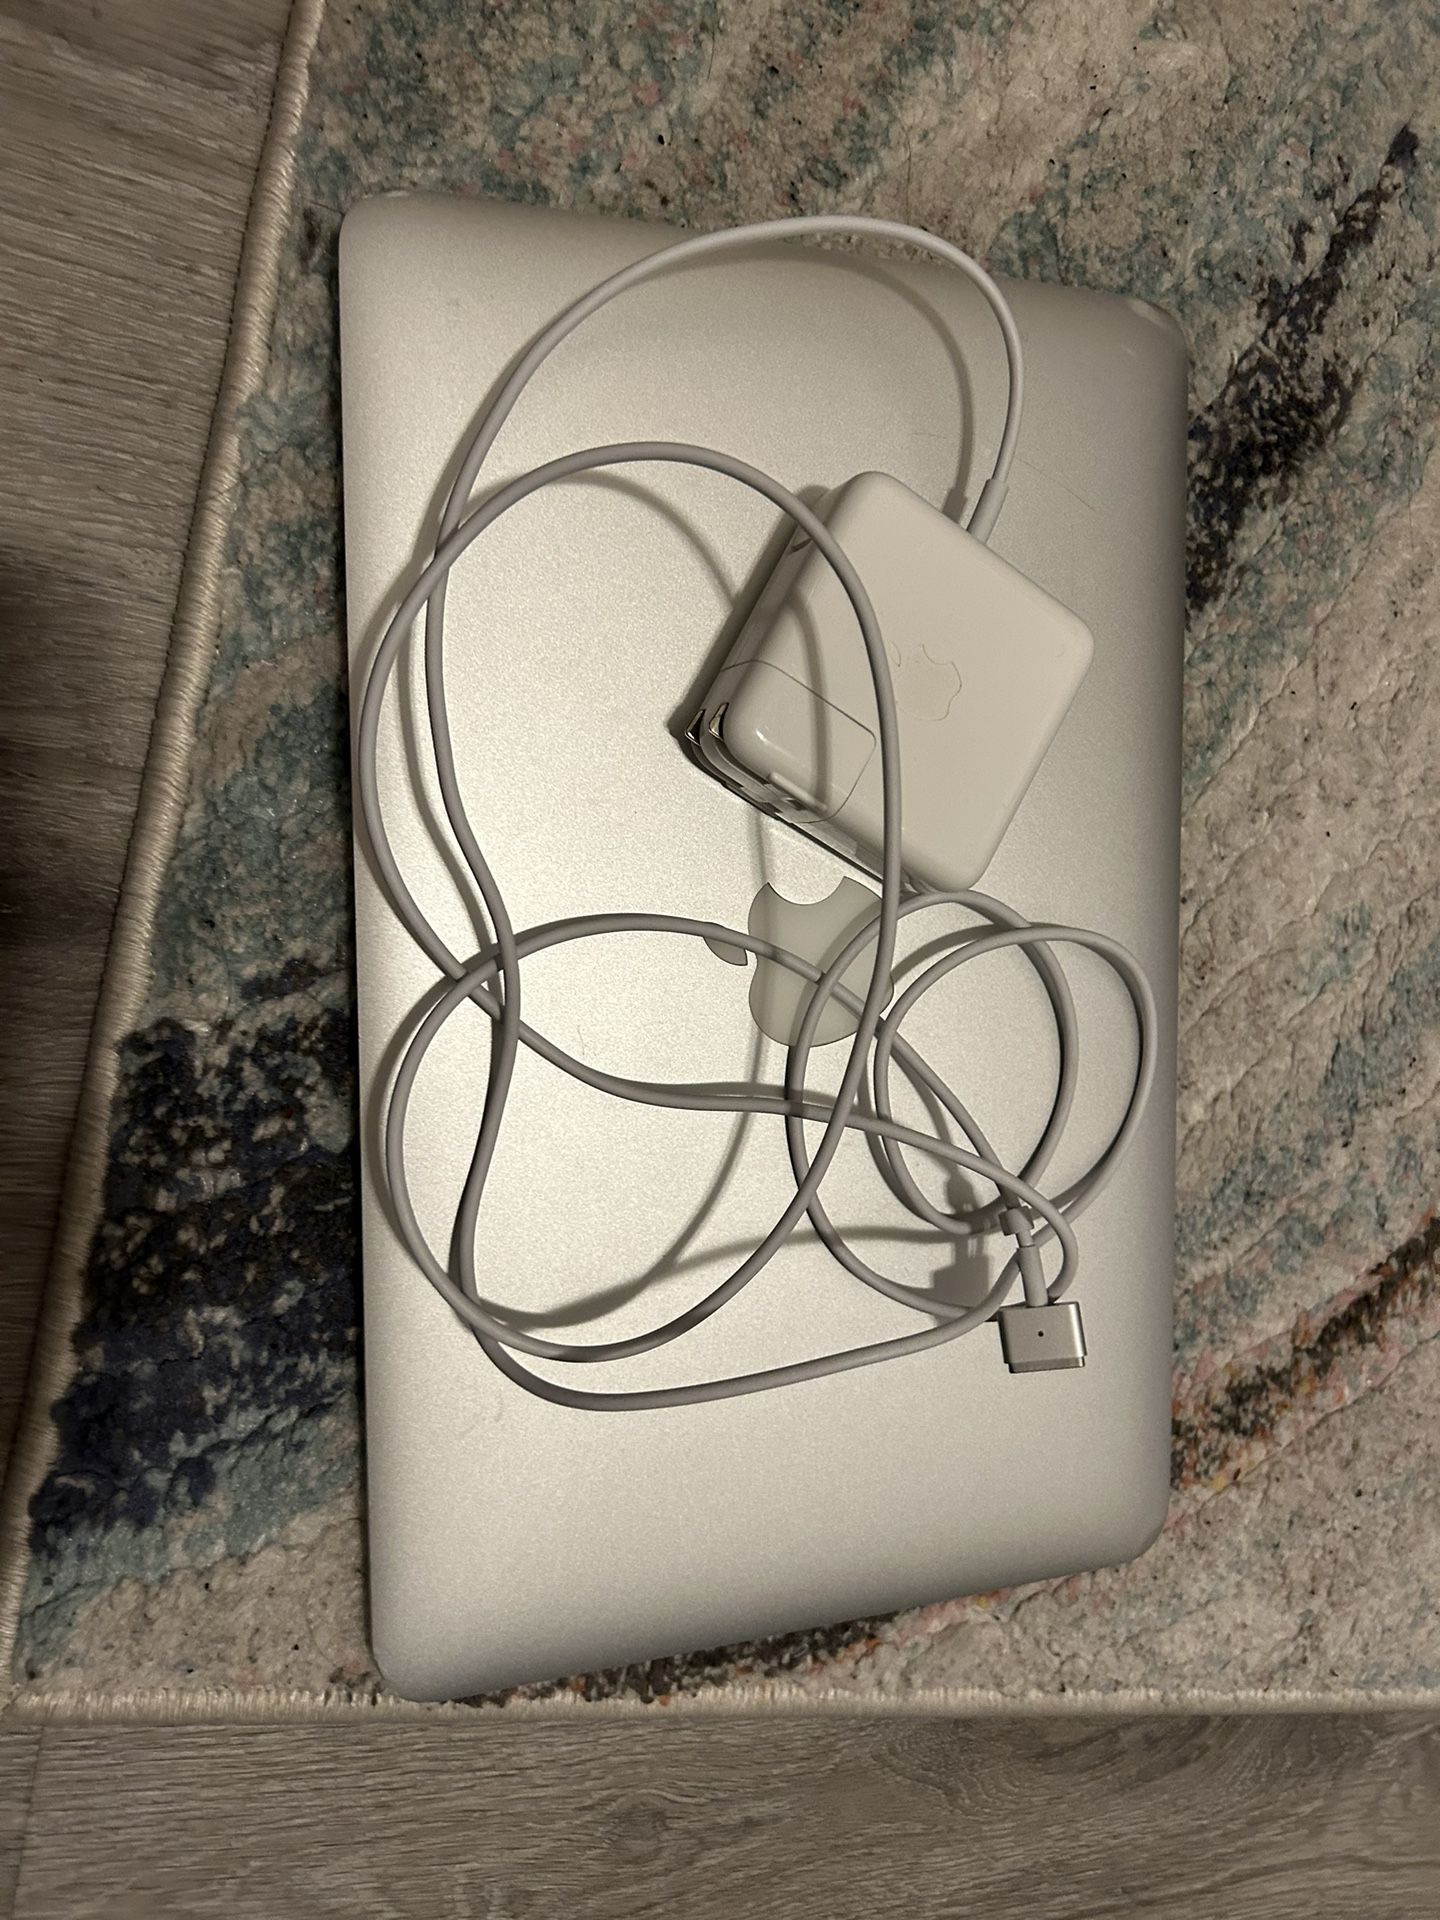 MacBook Air bundle charger